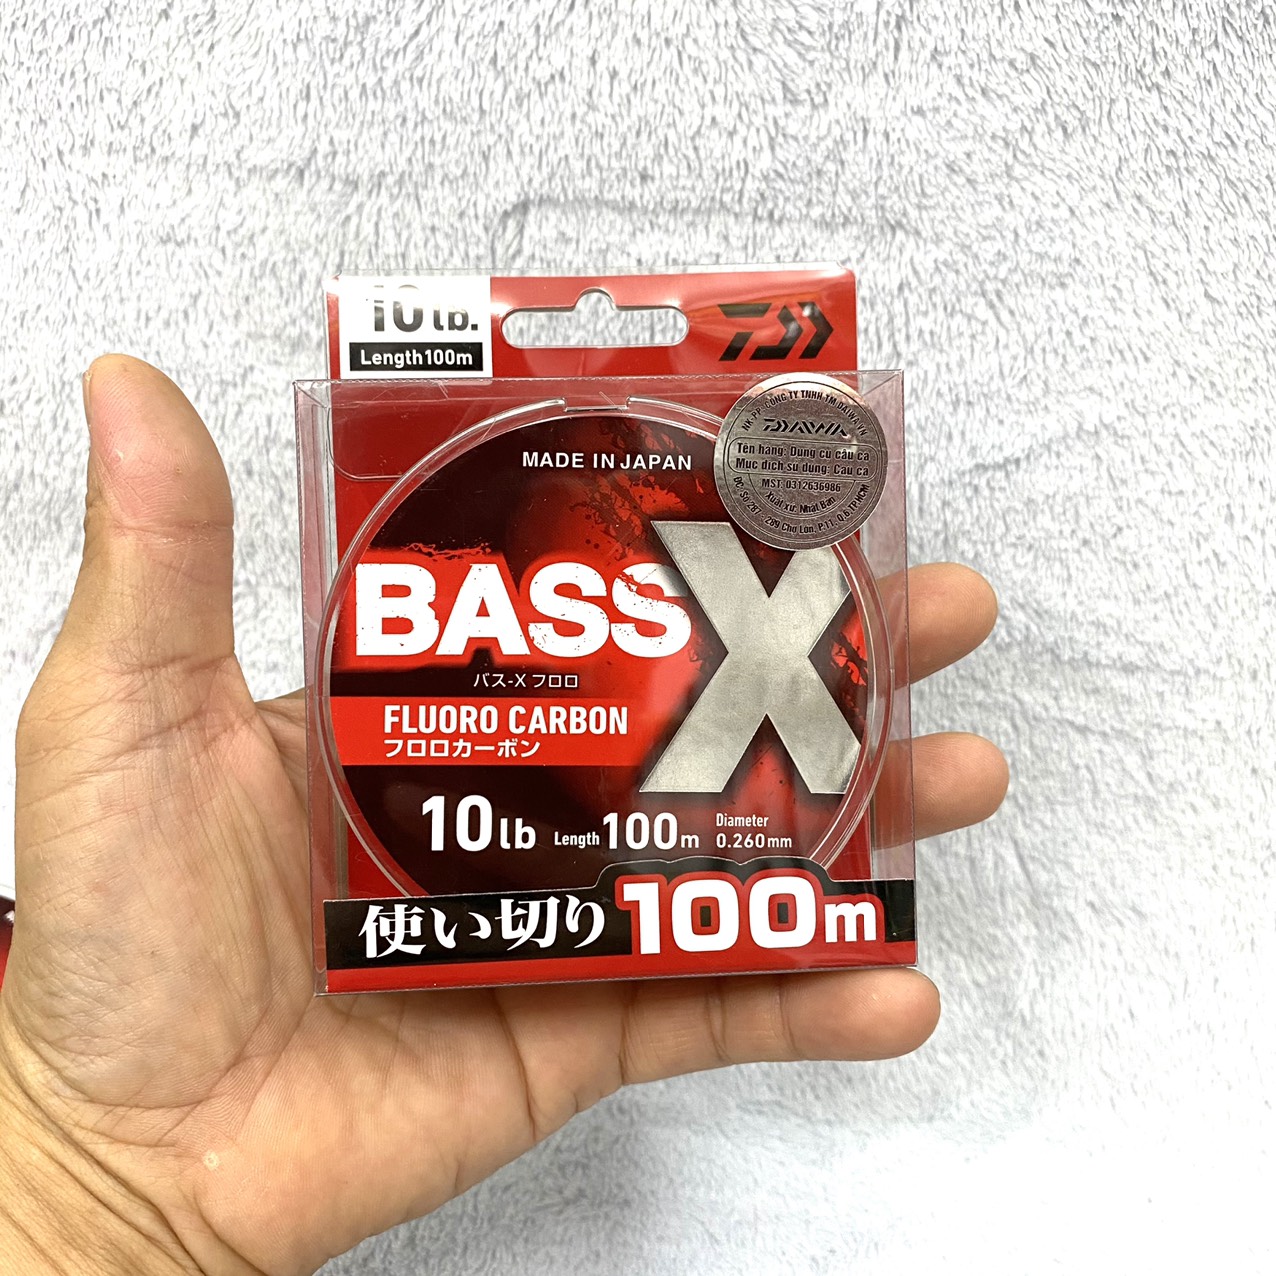 Dây Câu Cá Leader Daiwa Bass X 100% Fluoro Carbon Cuộn 100m Made In Japan